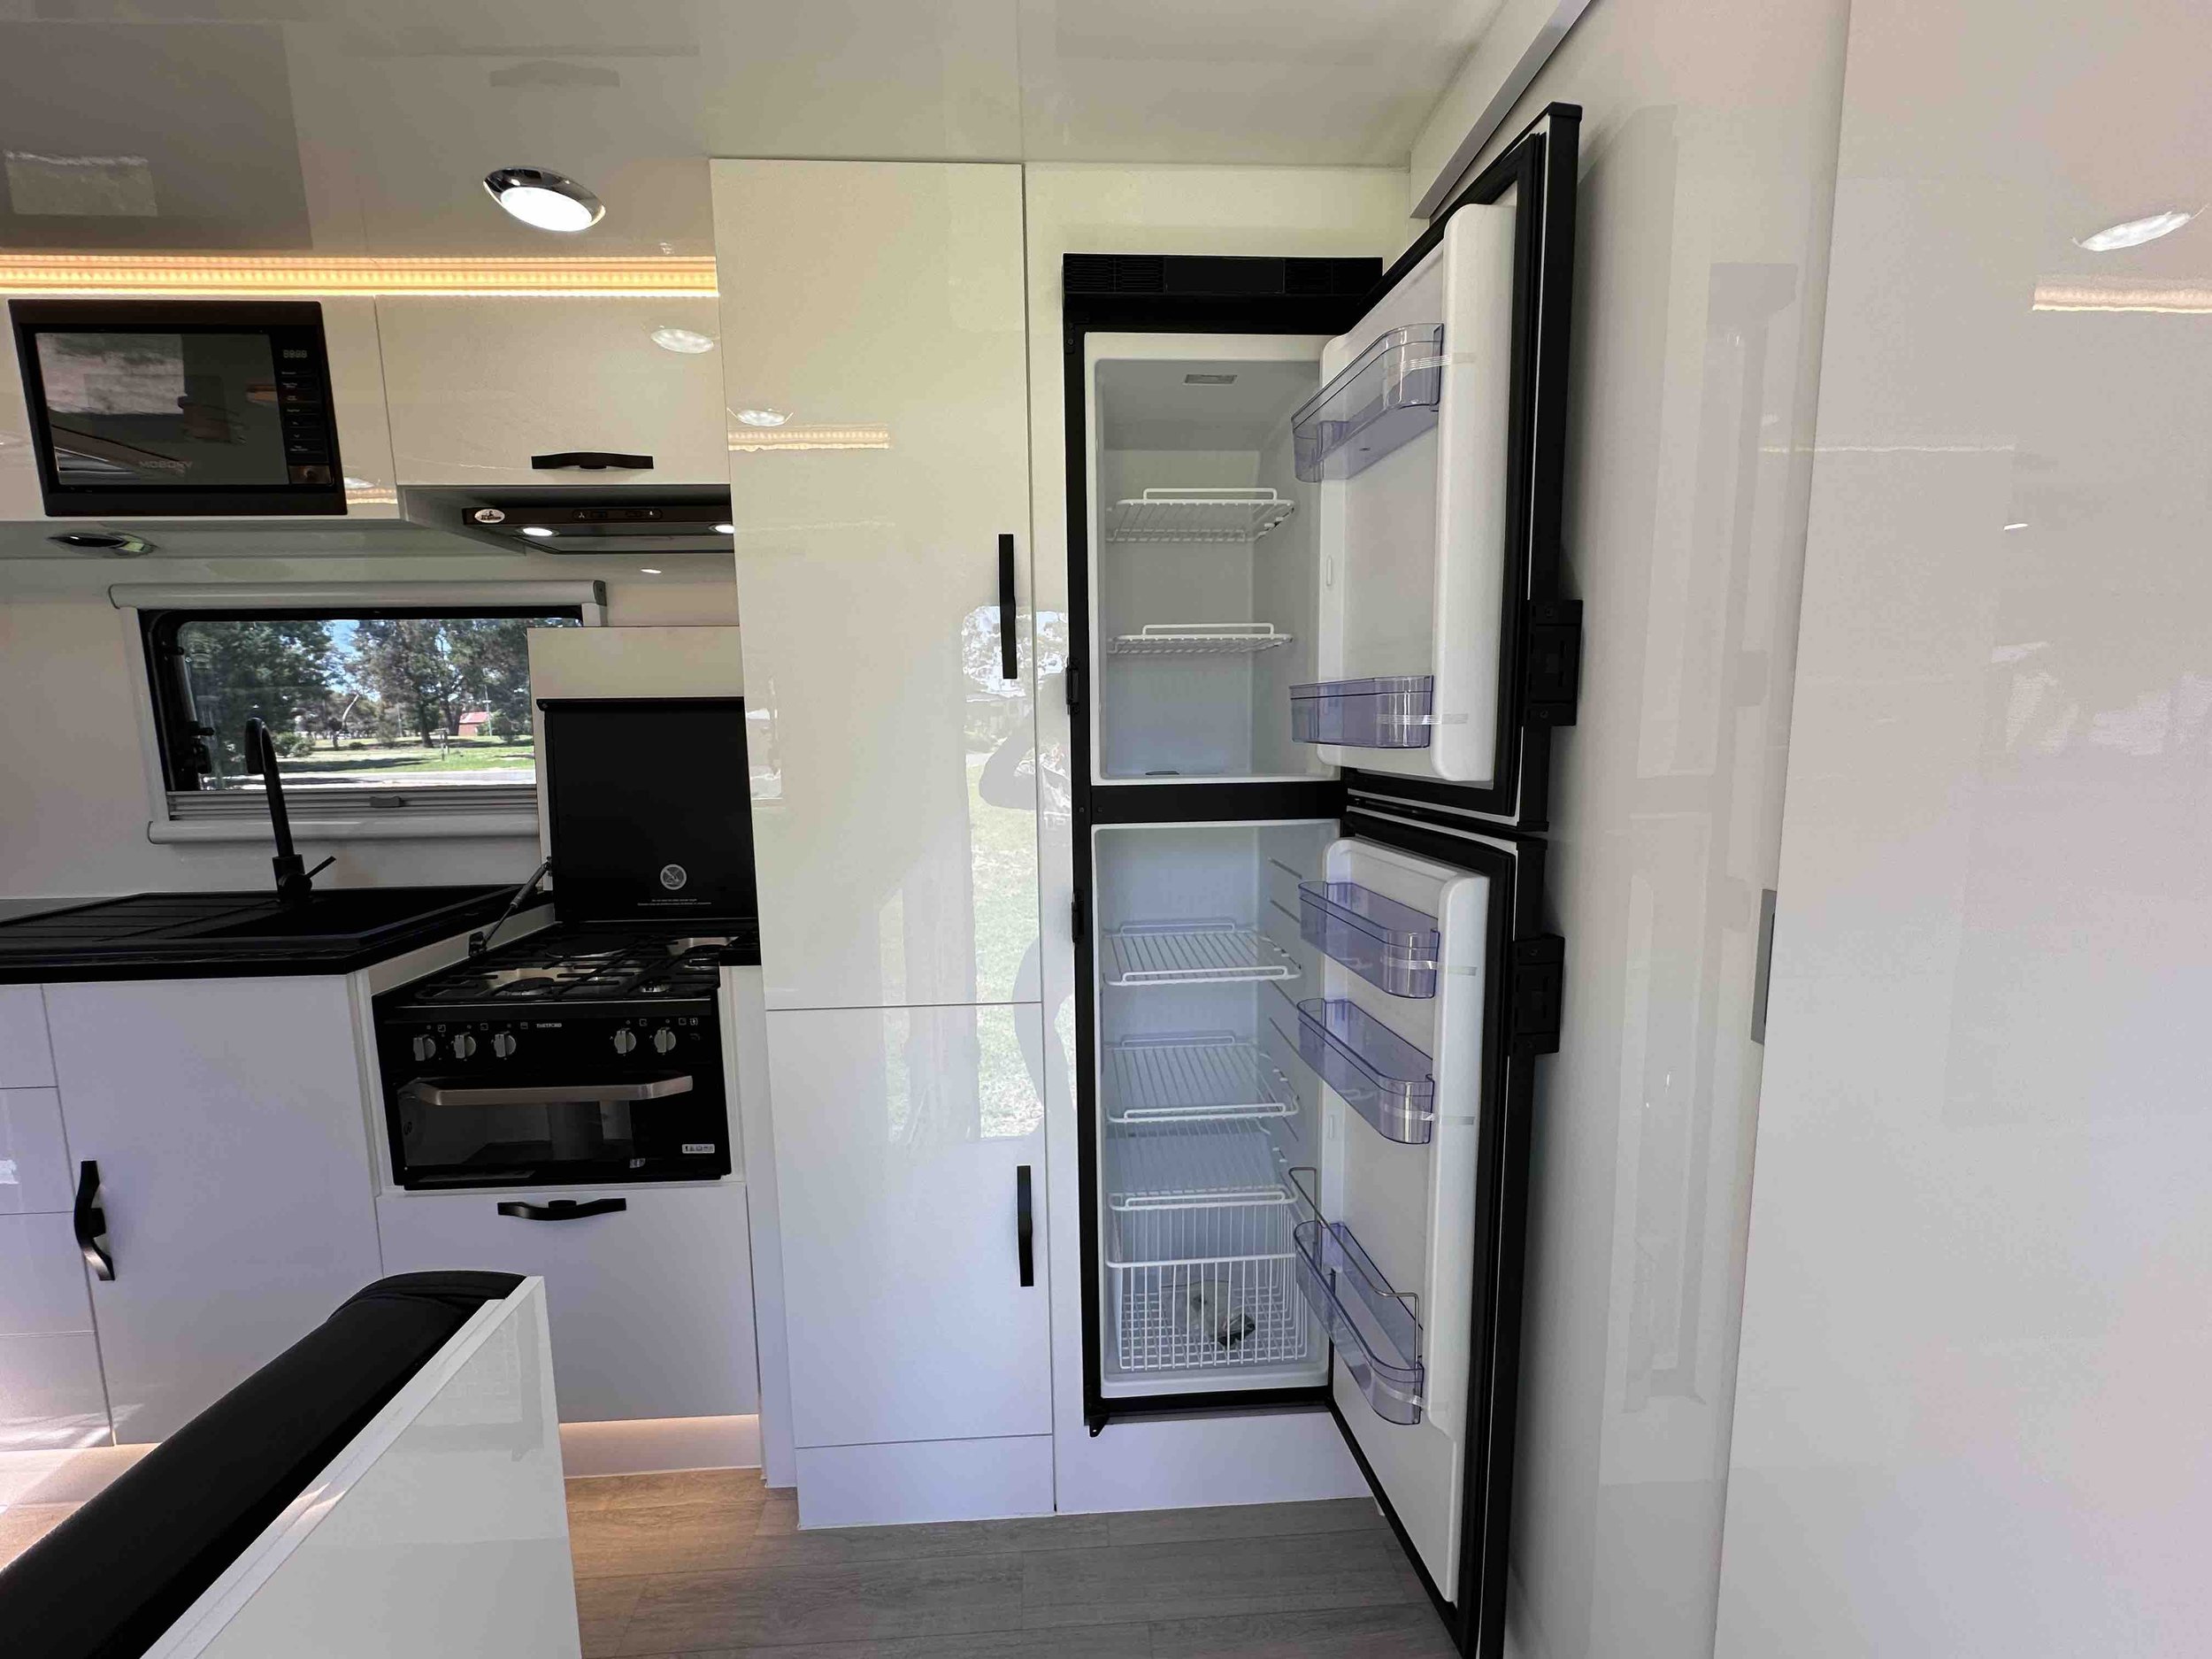 21 fridge.jpg